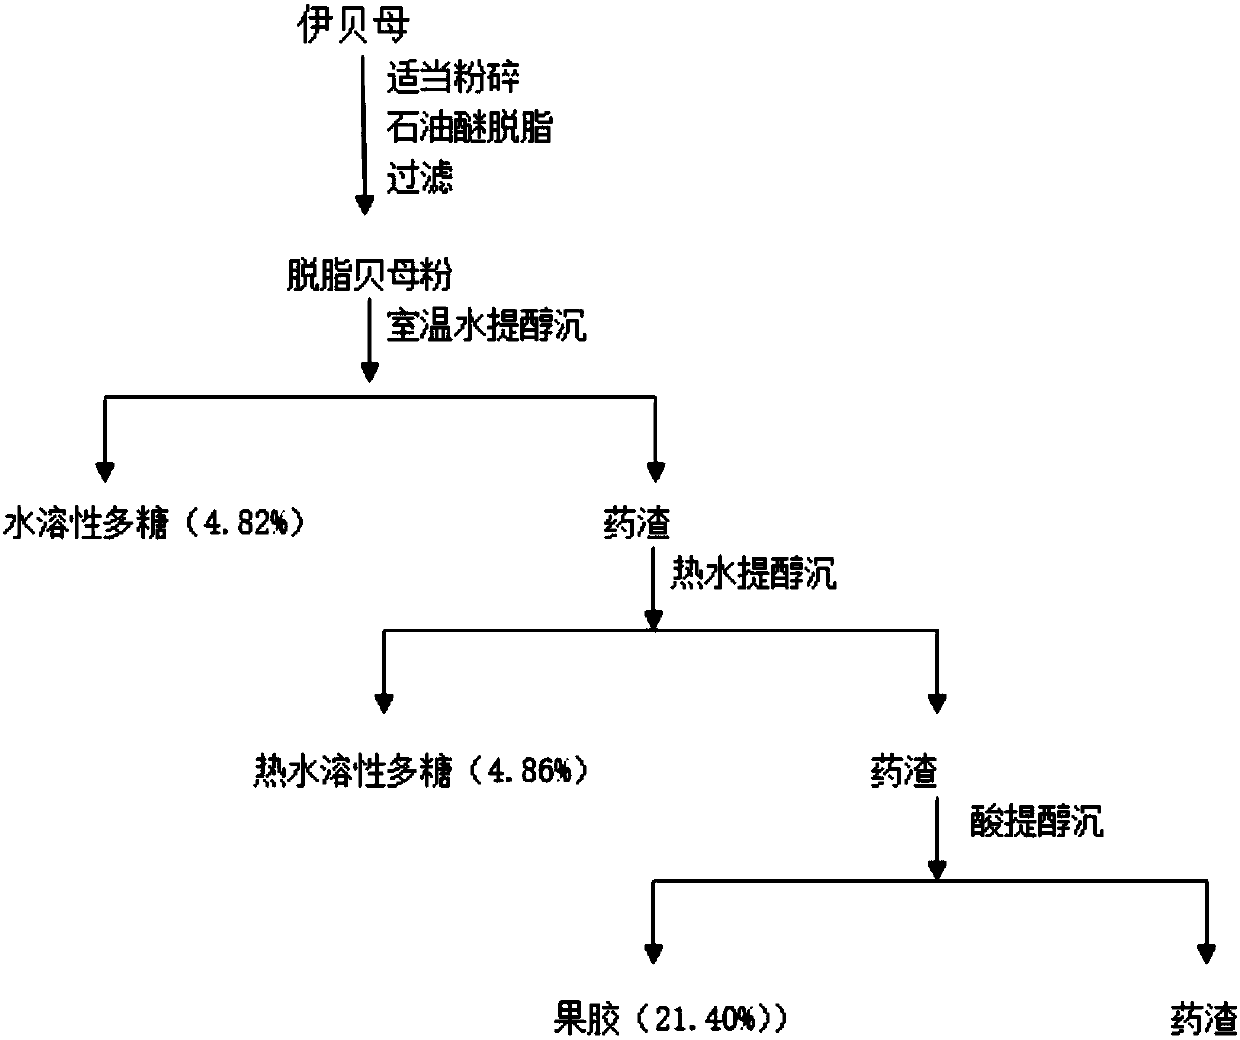 Preparation method and application of fritillaria pallidiflora total polysaccharide